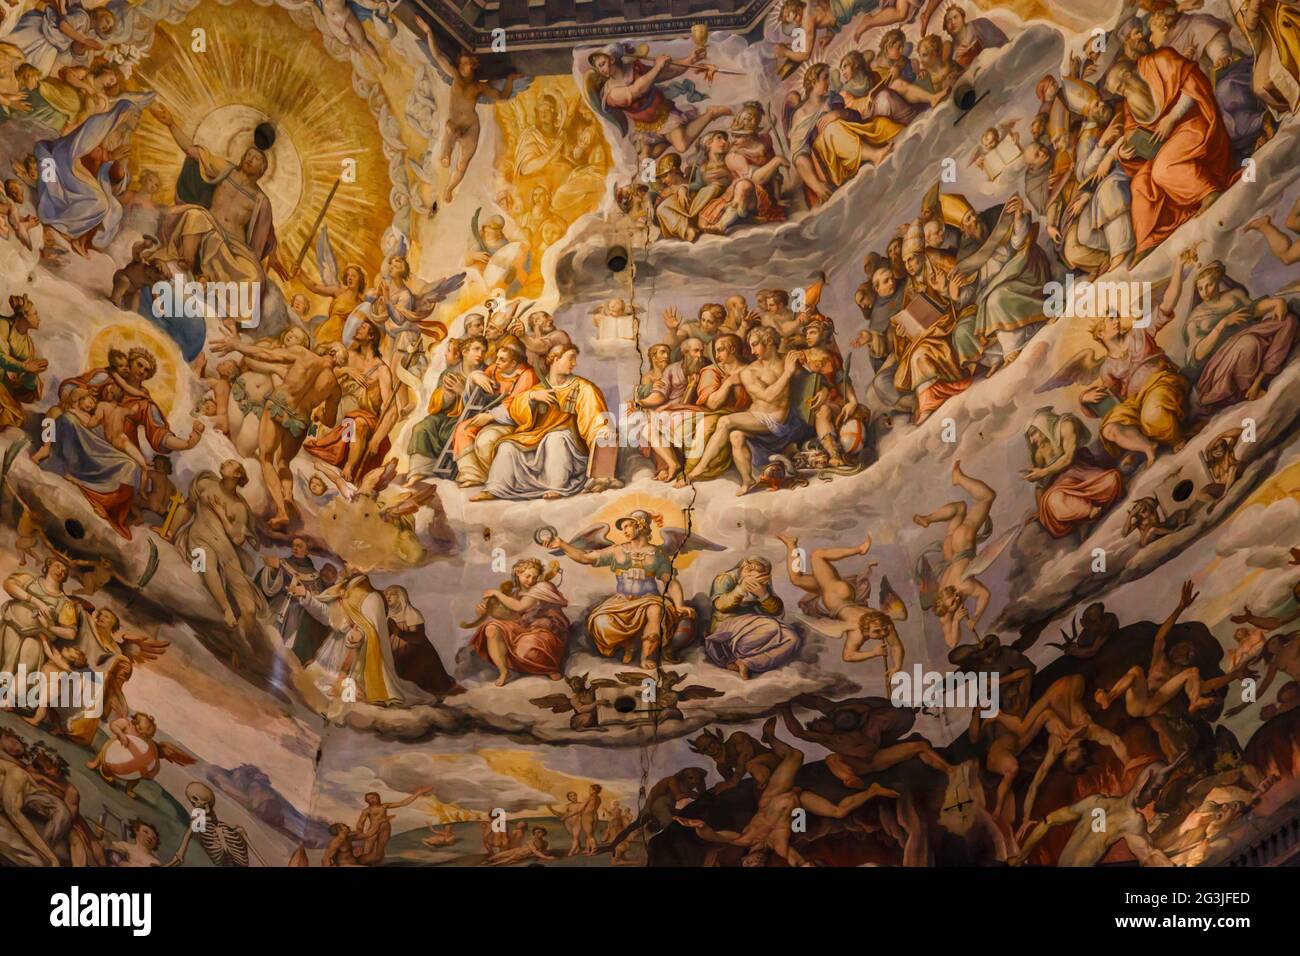 Interior Florence Duomo Stock Photo